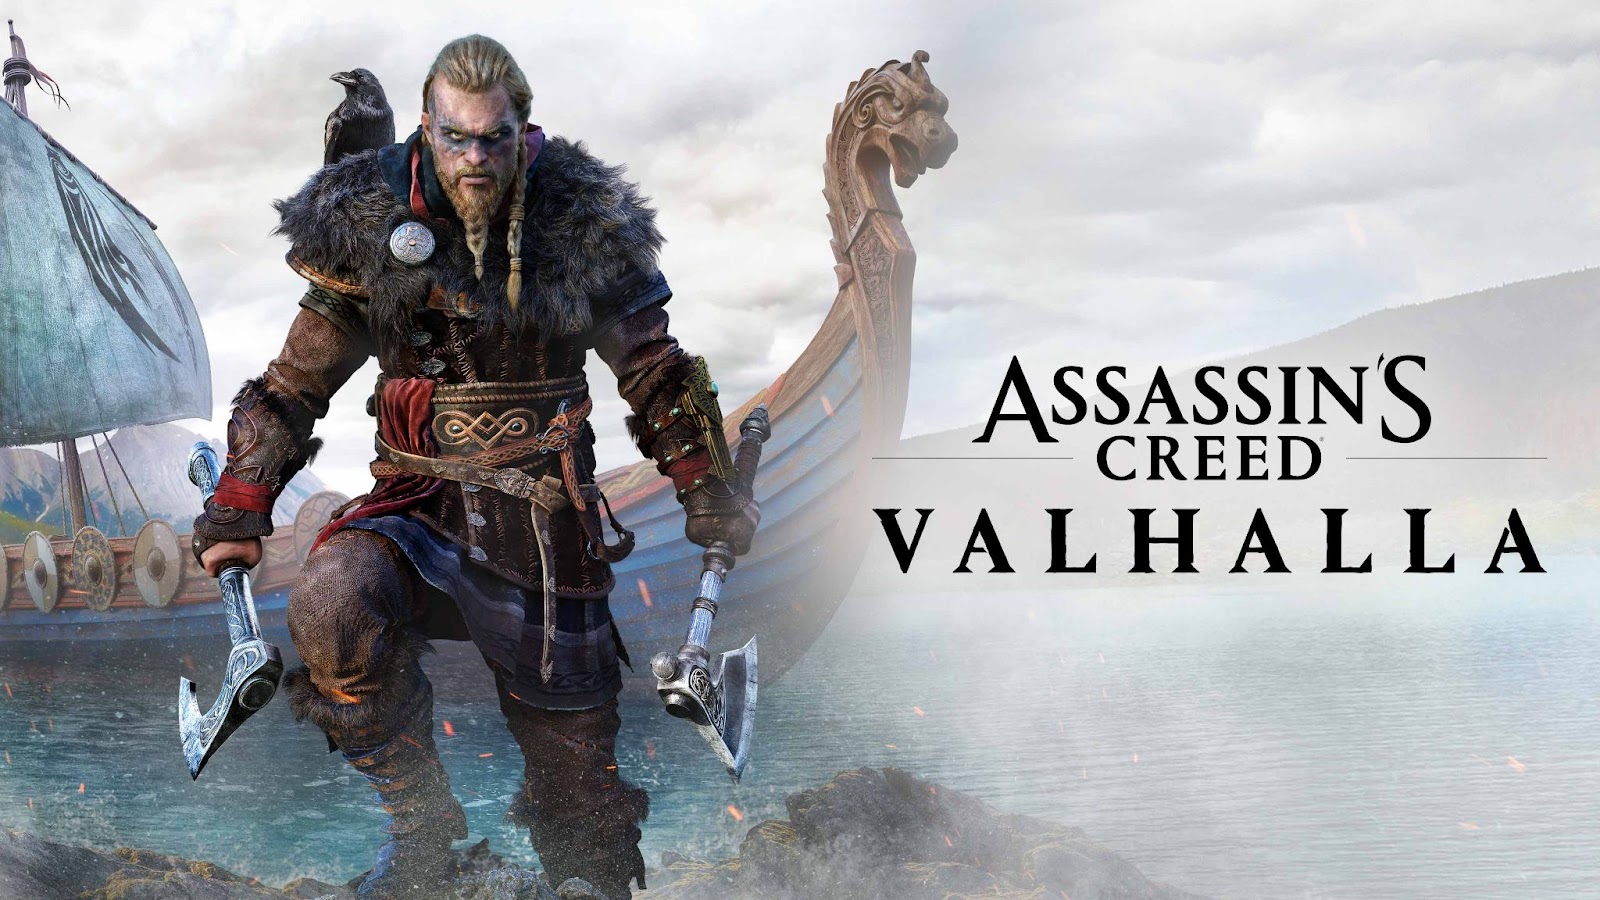 2. Assassin's Creed Valhalla